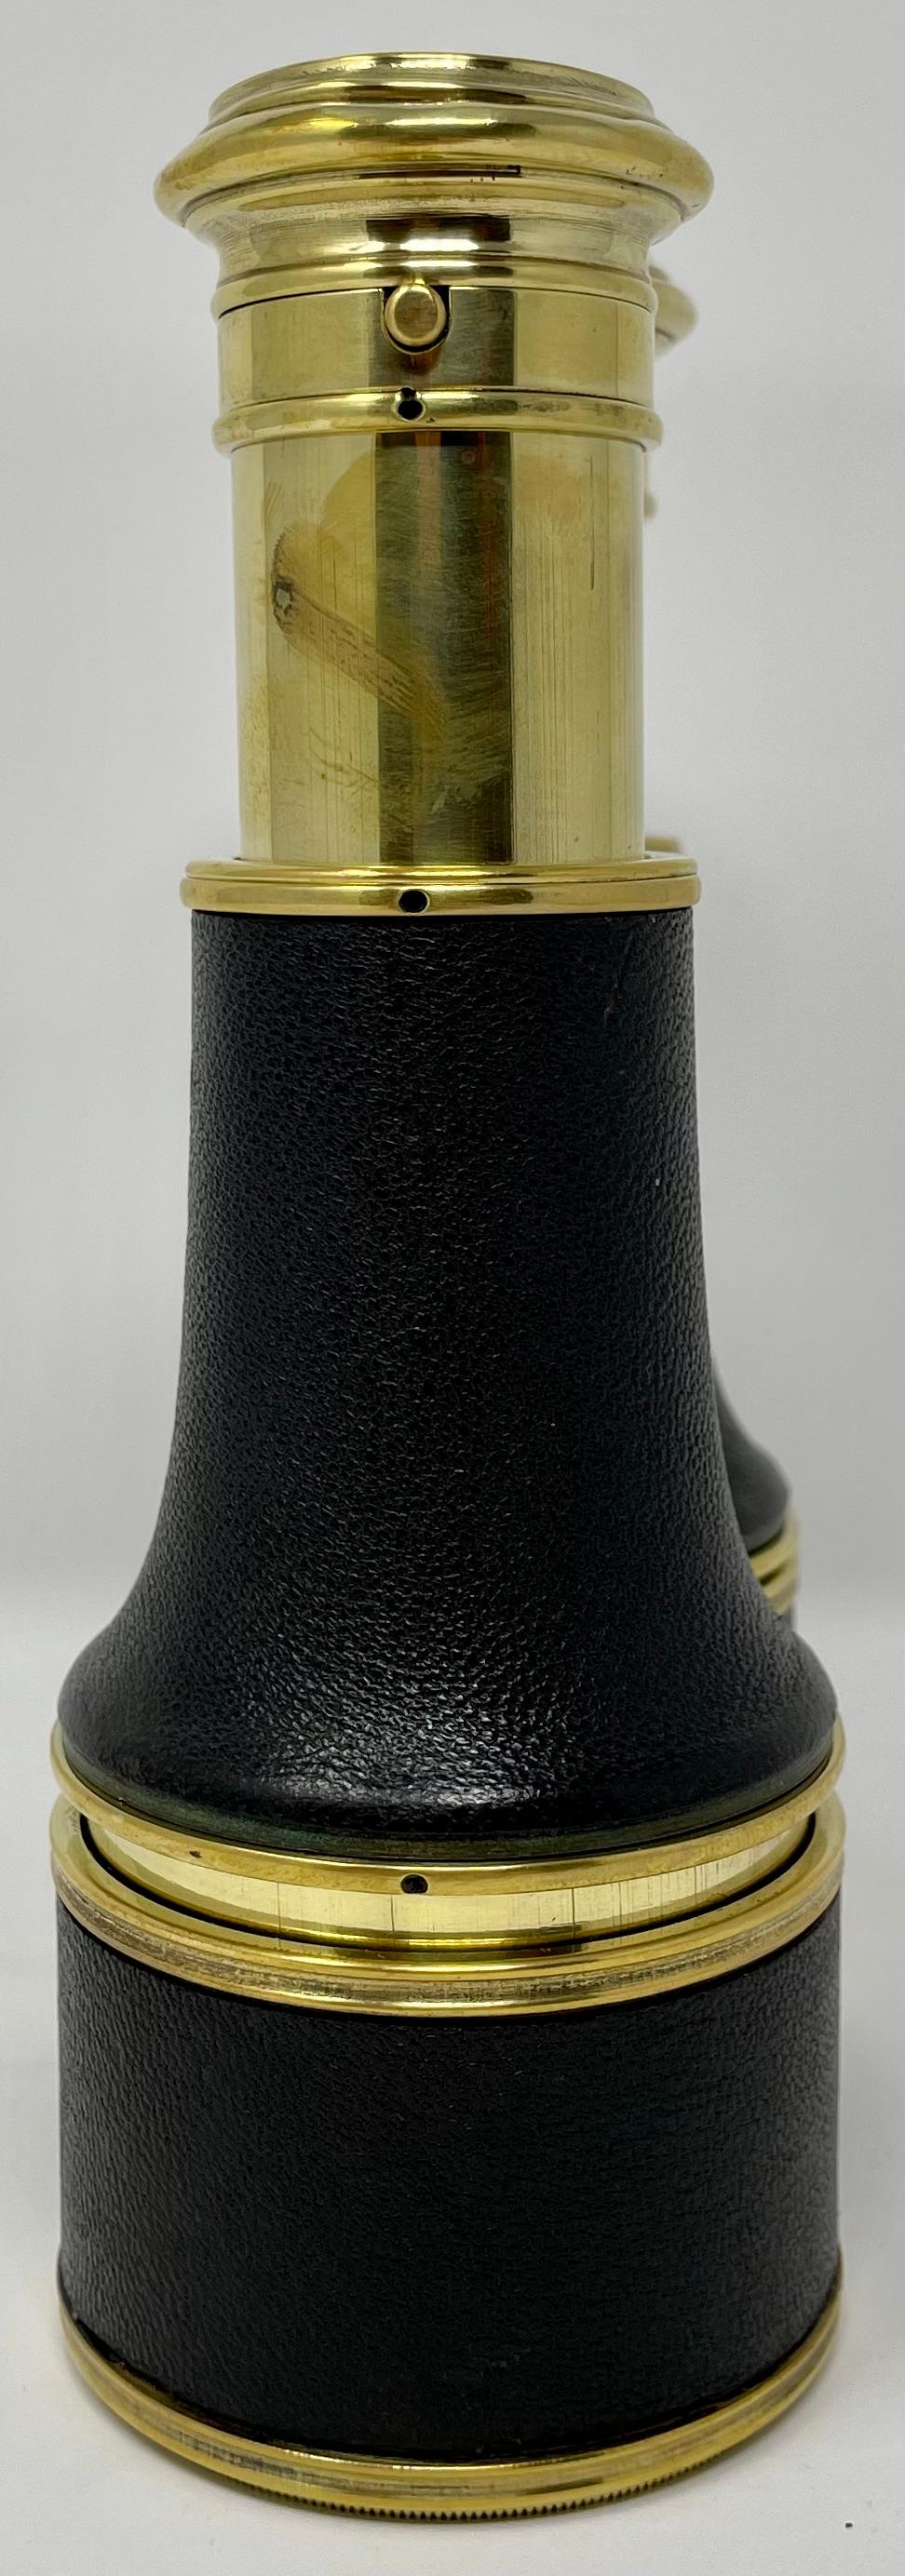 brass binoculars antique